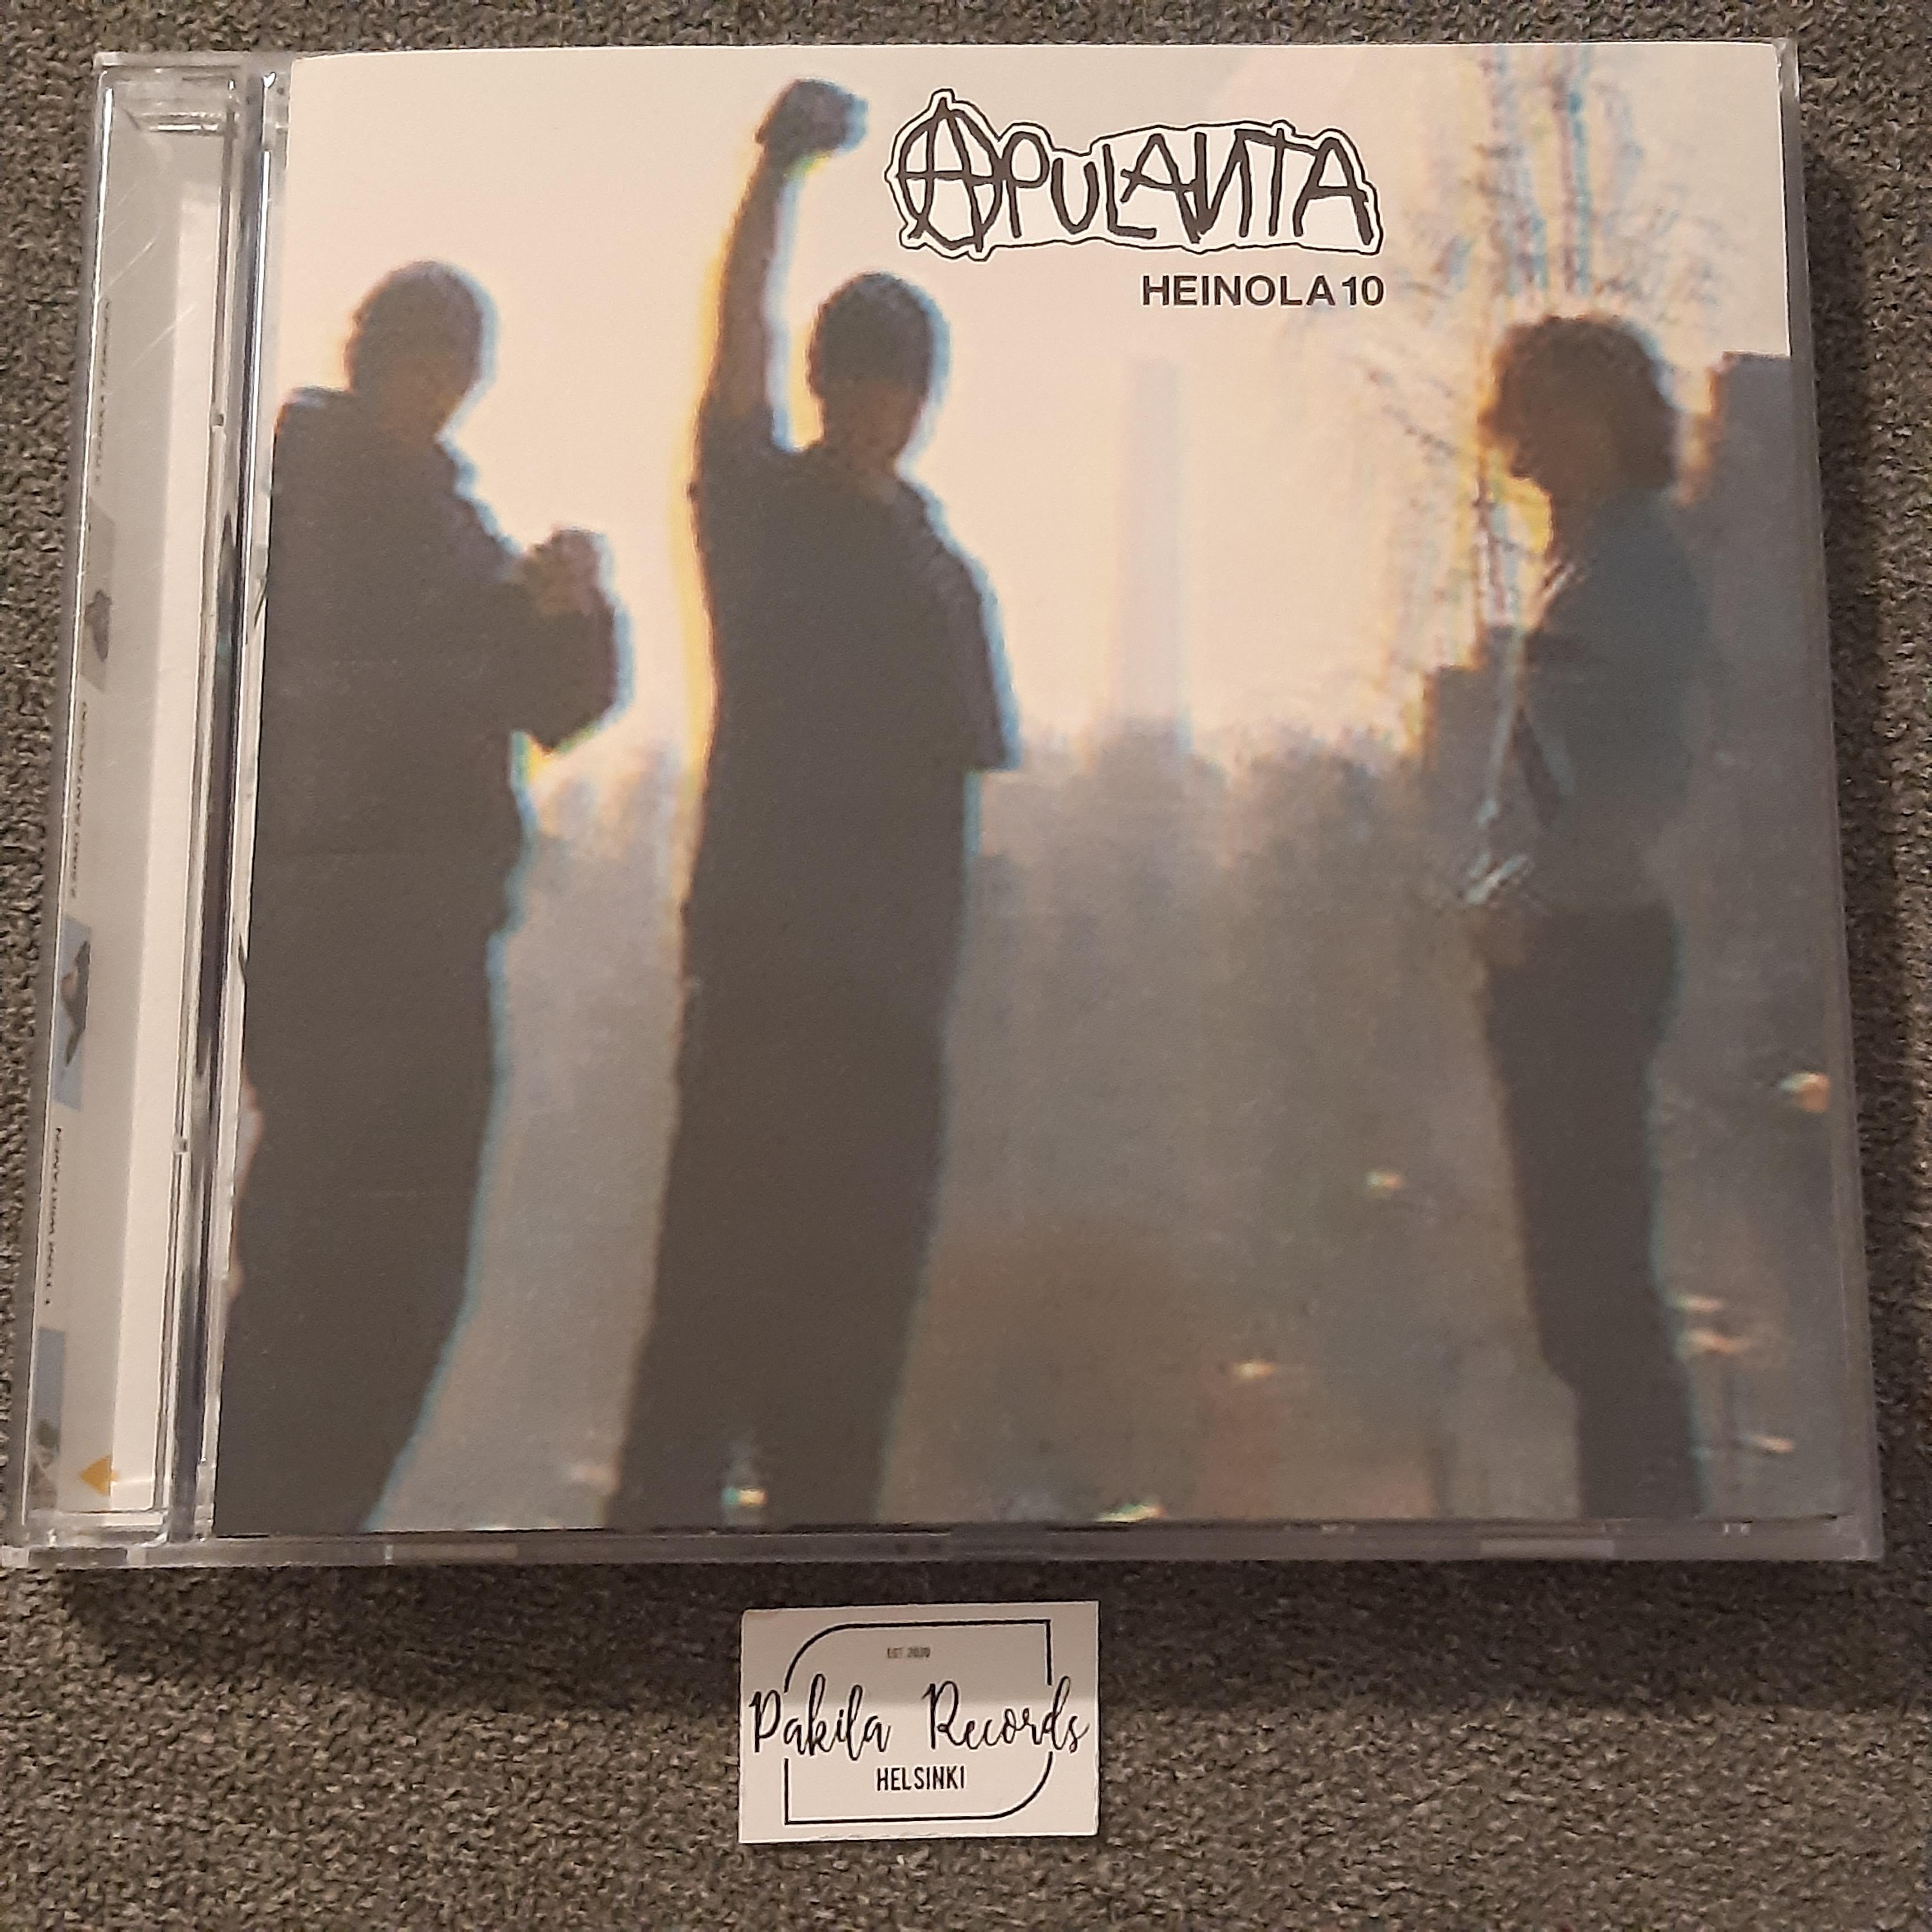 Apulanta - Heinola 10 - CD (käytetty)